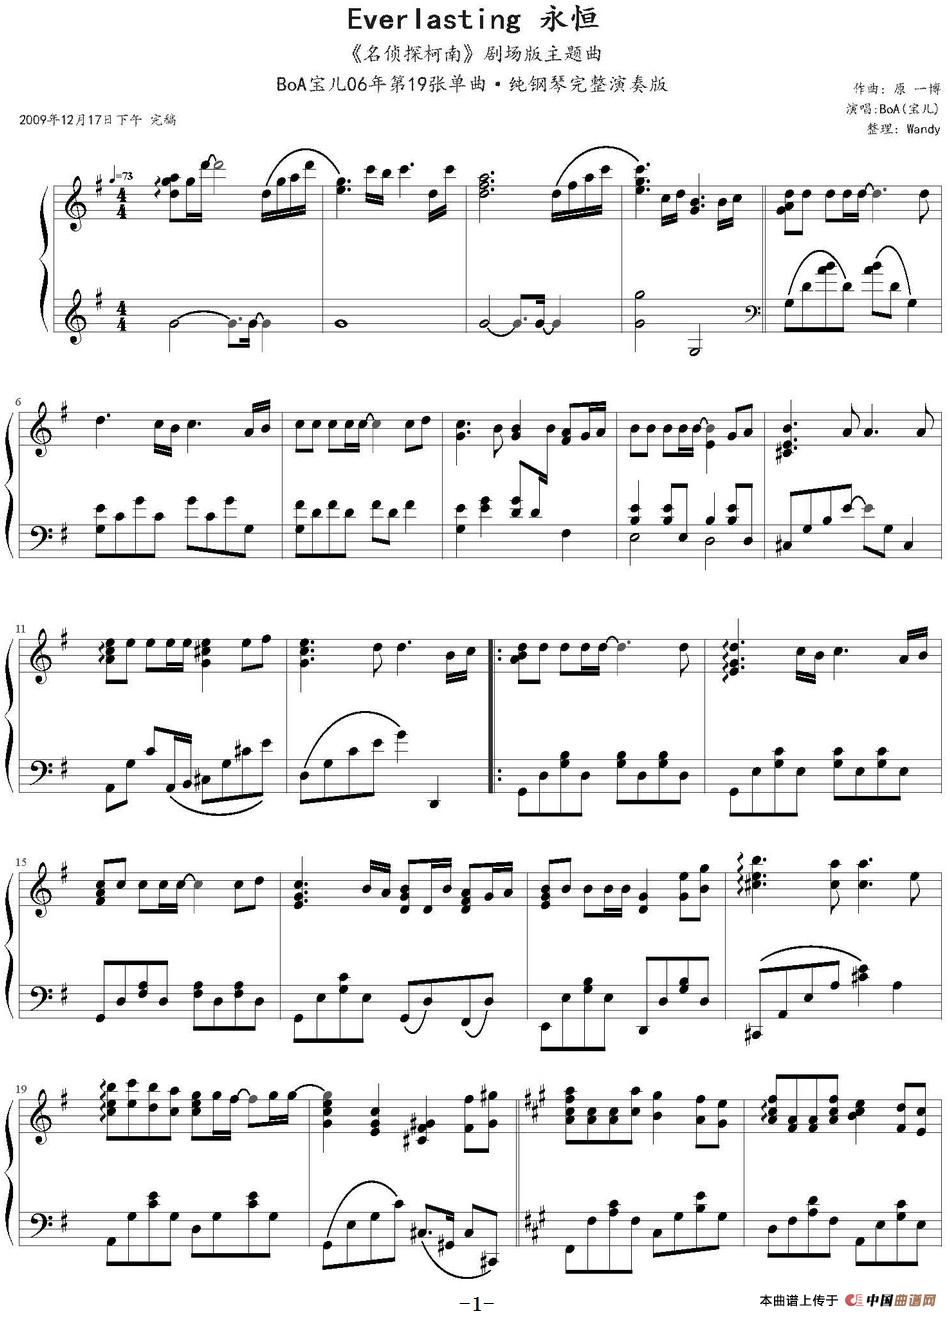 《Everlasting》钢琴曲谱图分享